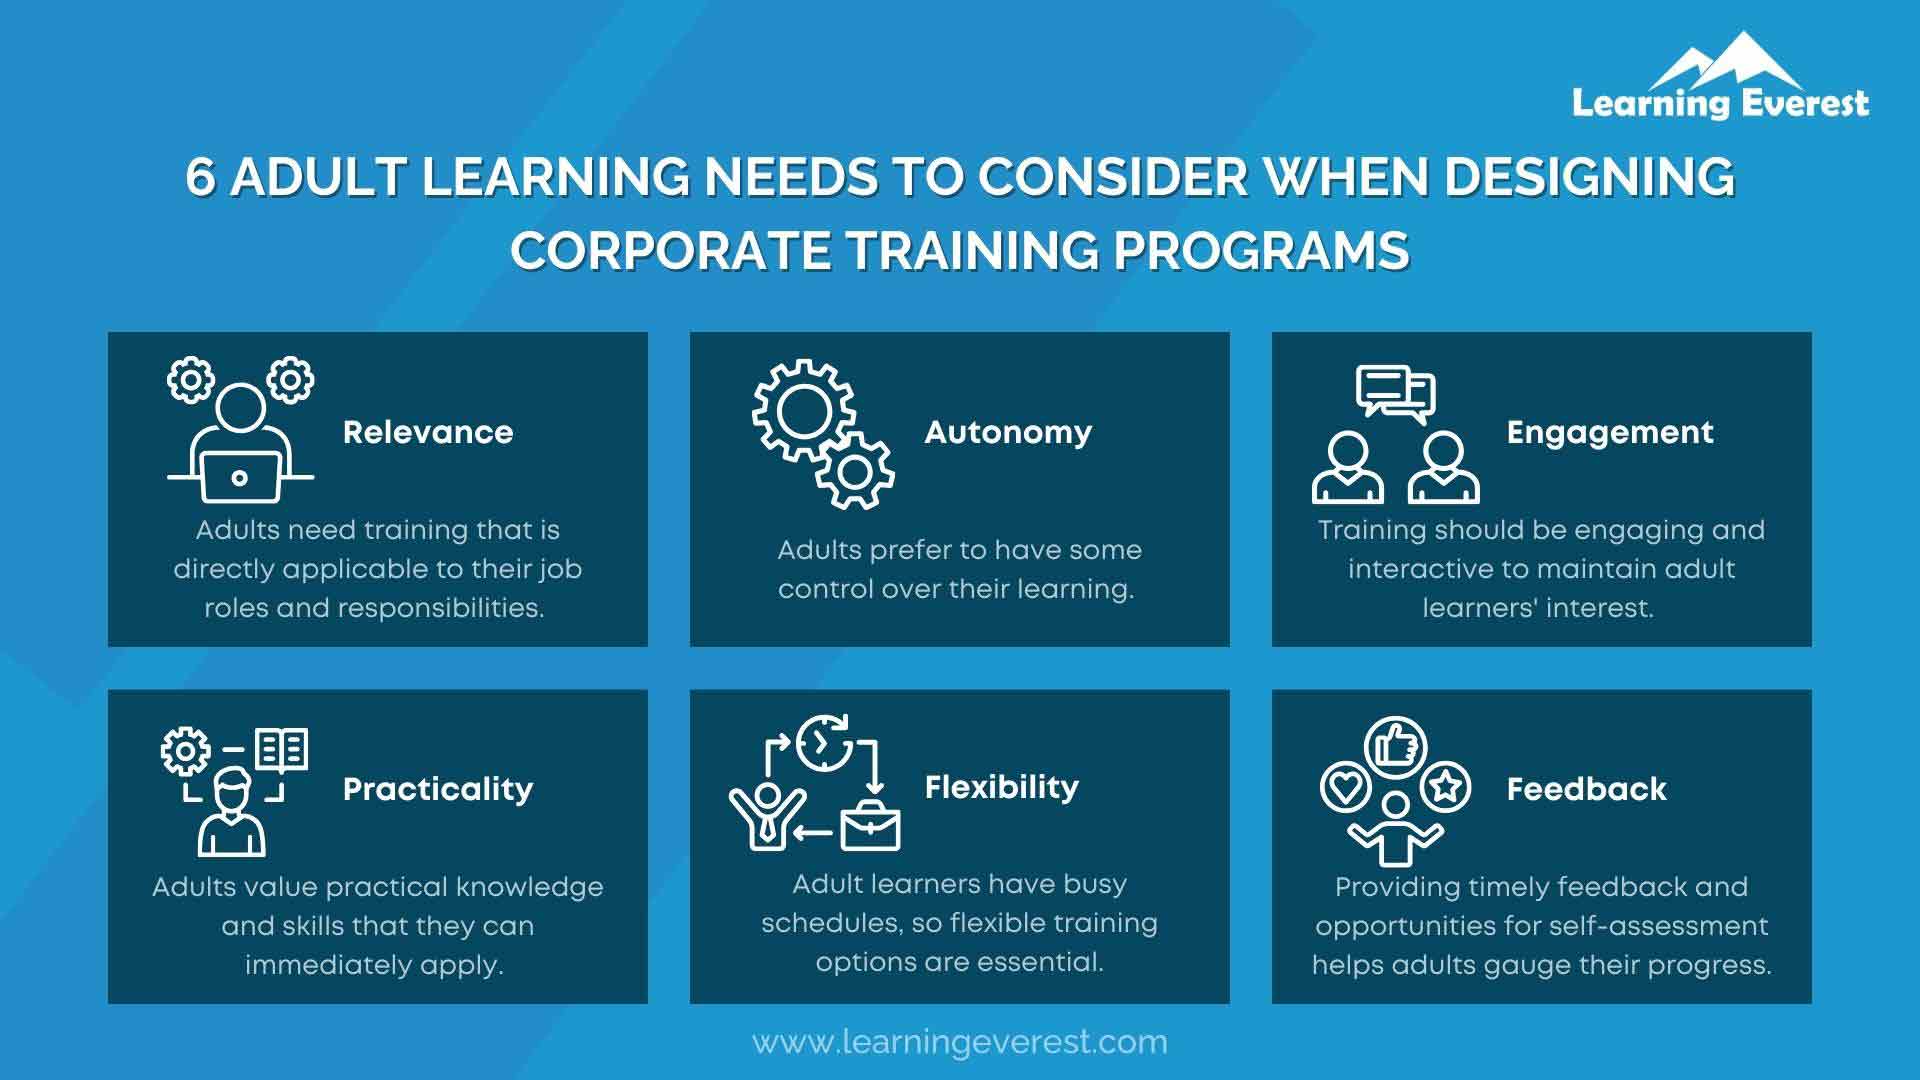 Process Training Challenge - Understanding Learners’ Needs